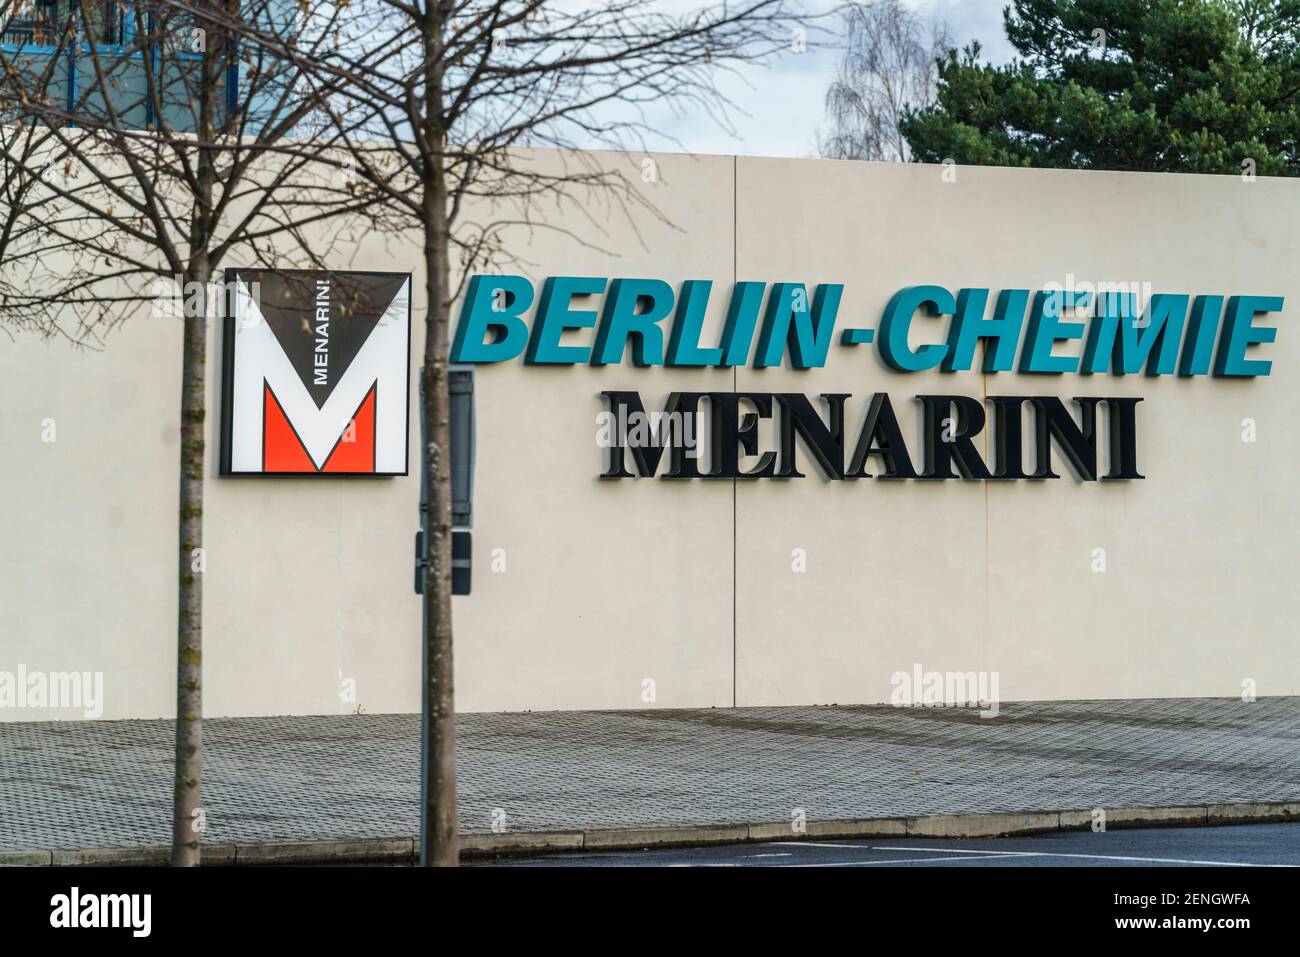 Berlin-Chemie Menarini, Pharmaunternehmen, Berlin-Adlershof, Berlin, Corona Impfstoff Aufbereitung und Abfuellung fuer Impfzentrum Arena Treptow, Foto Stock